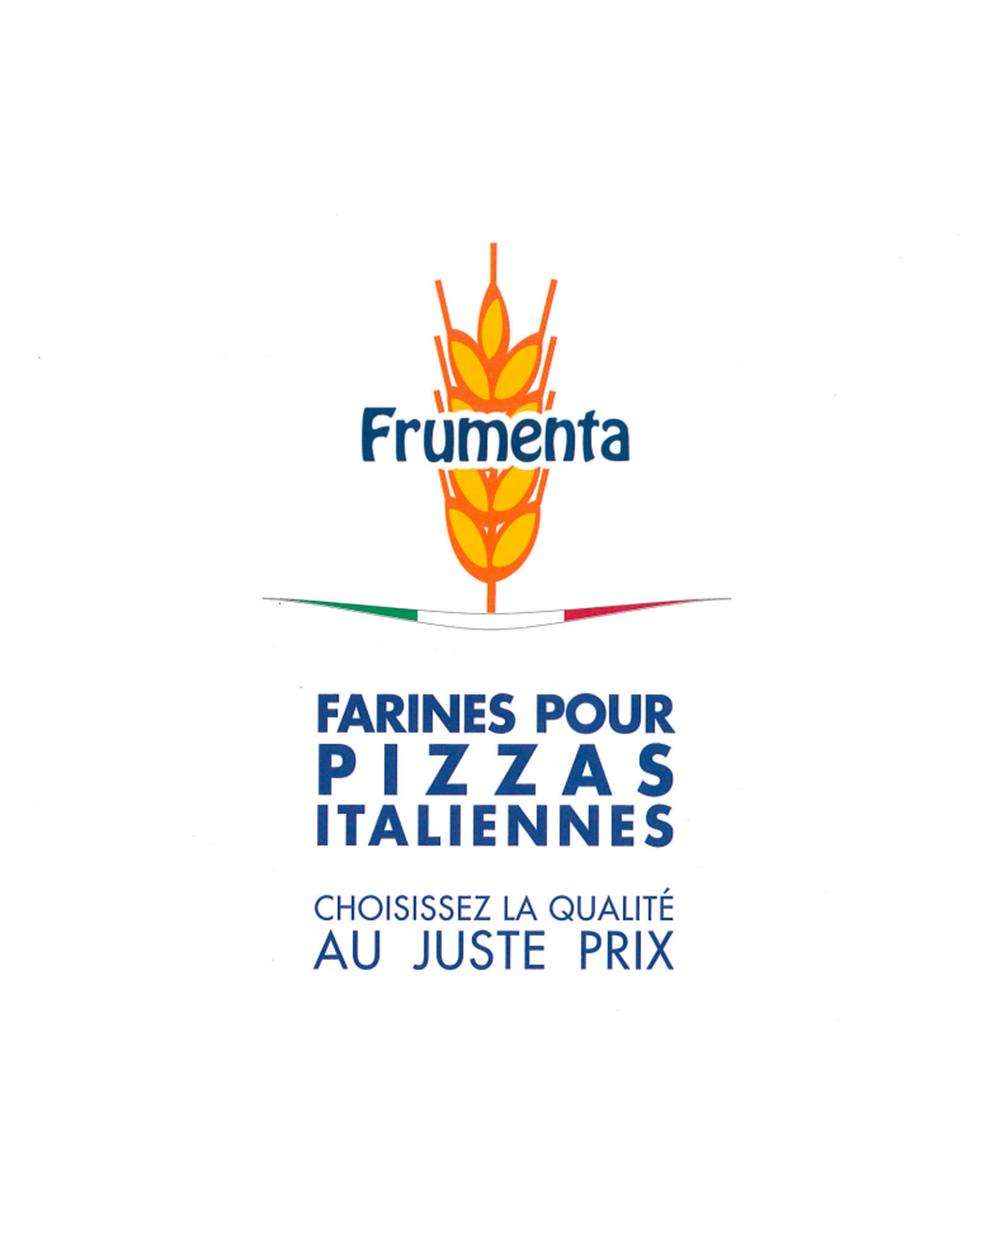 Achat Farine Frumenta Pizza Classica 5kg